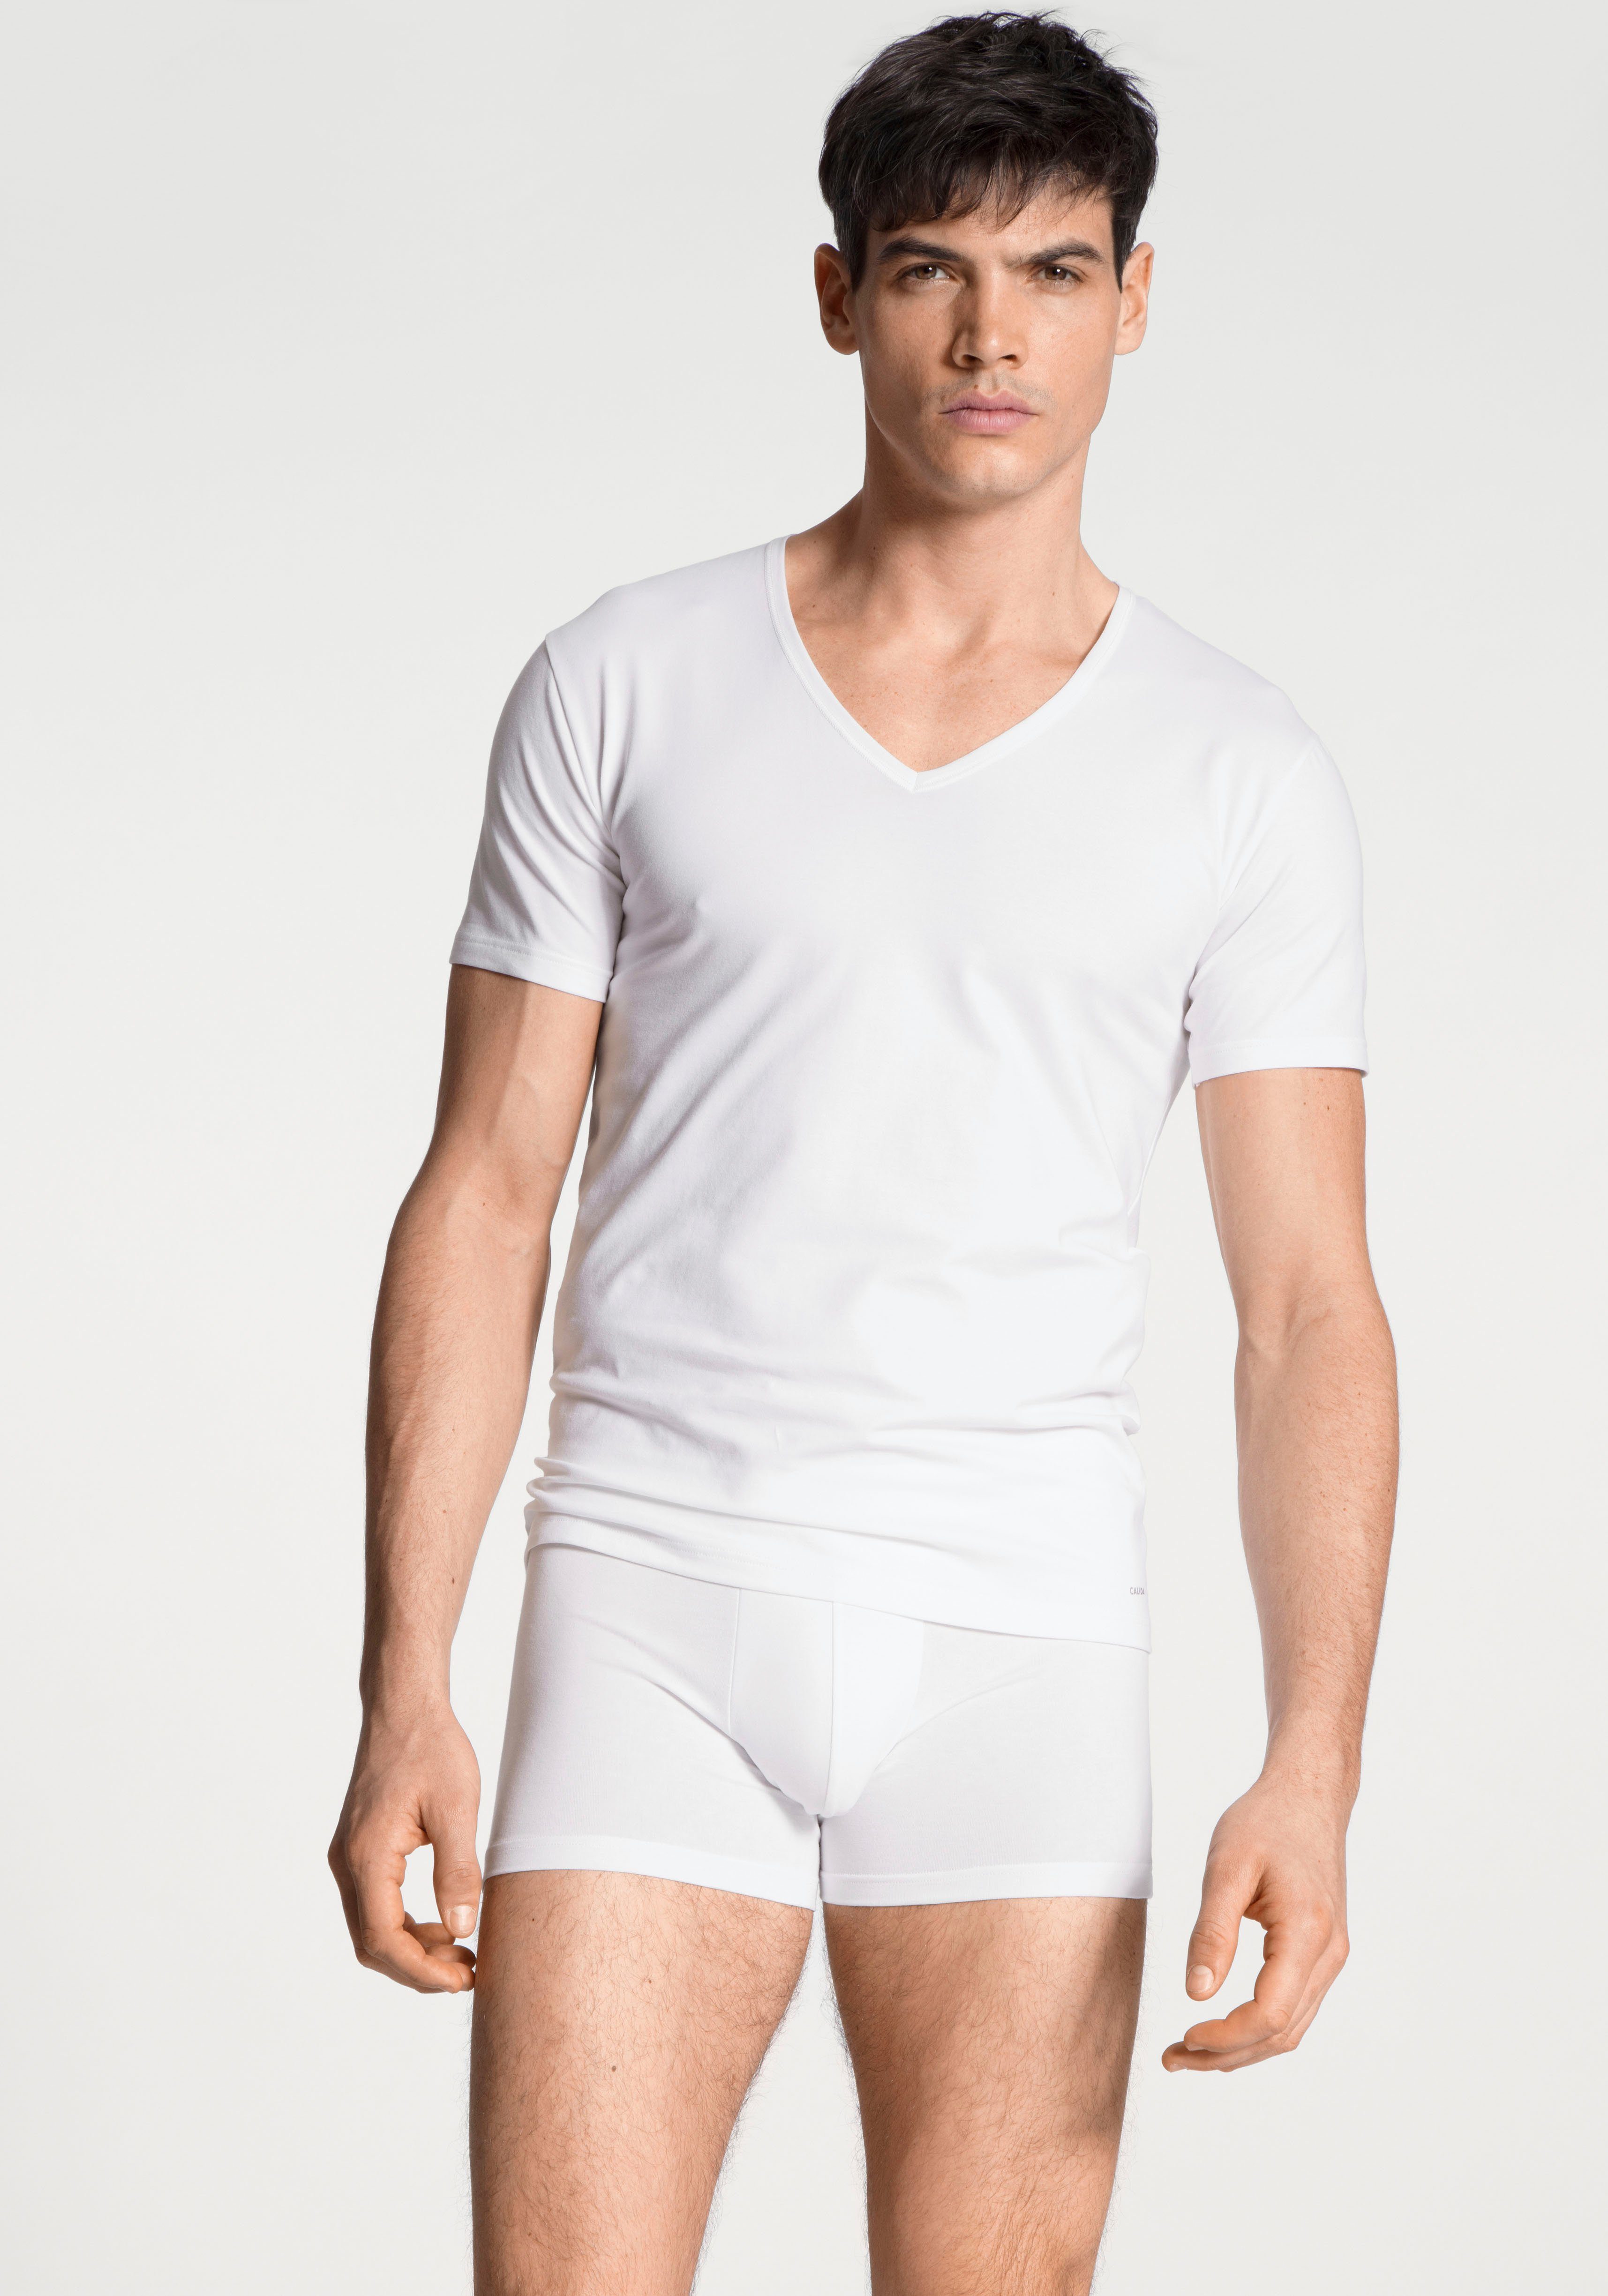 CALIDA T-Shirt Cotton Code mit V-Ausschnitt und perfekter Passform